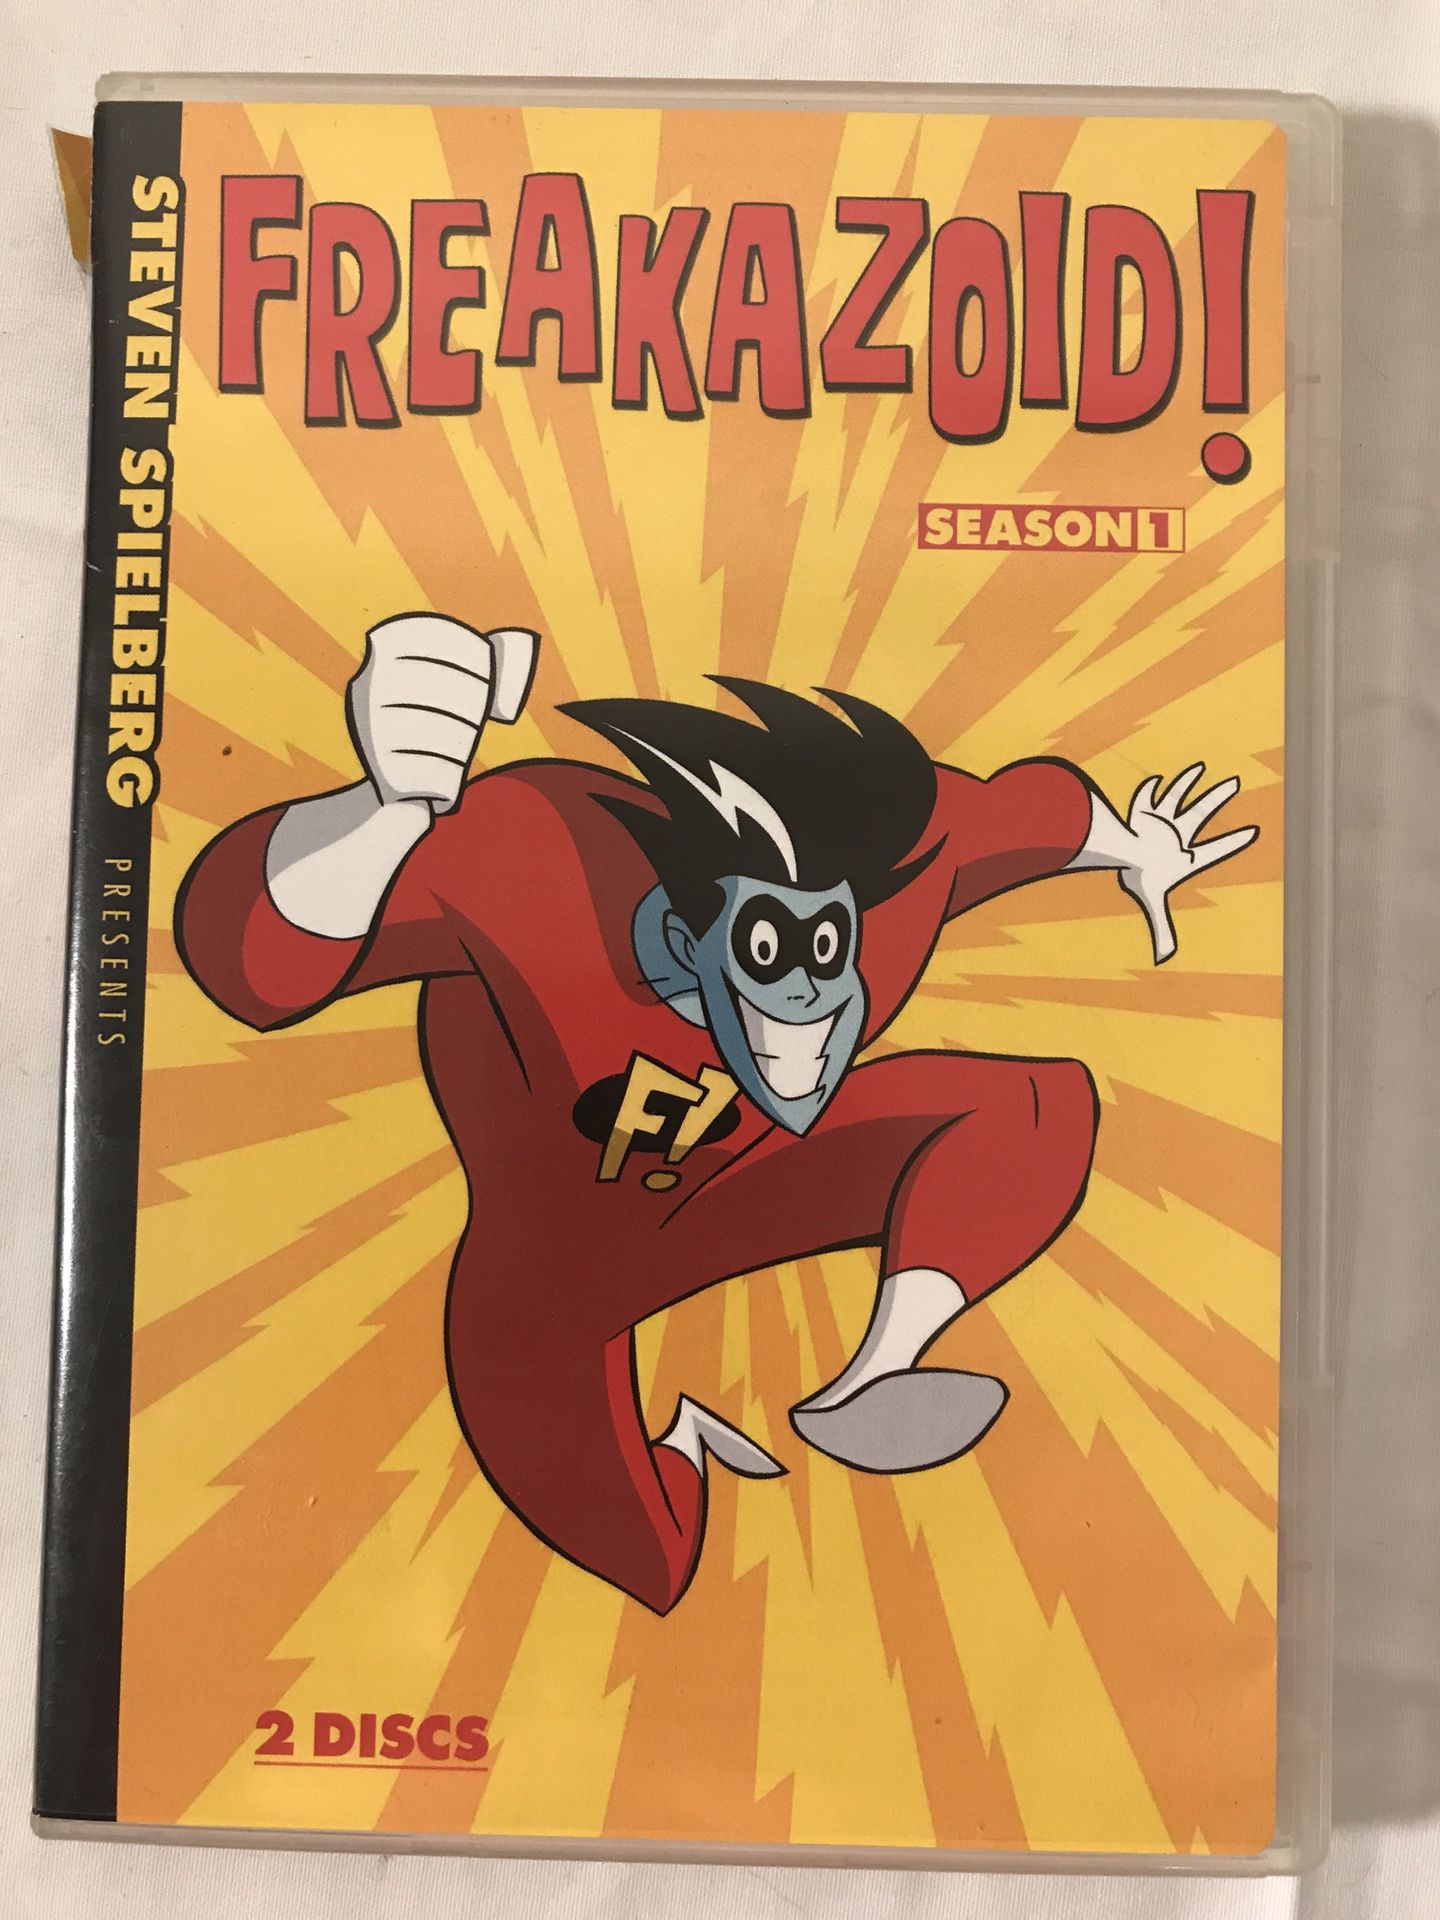 Freakazoid season 1 complete dvd box set